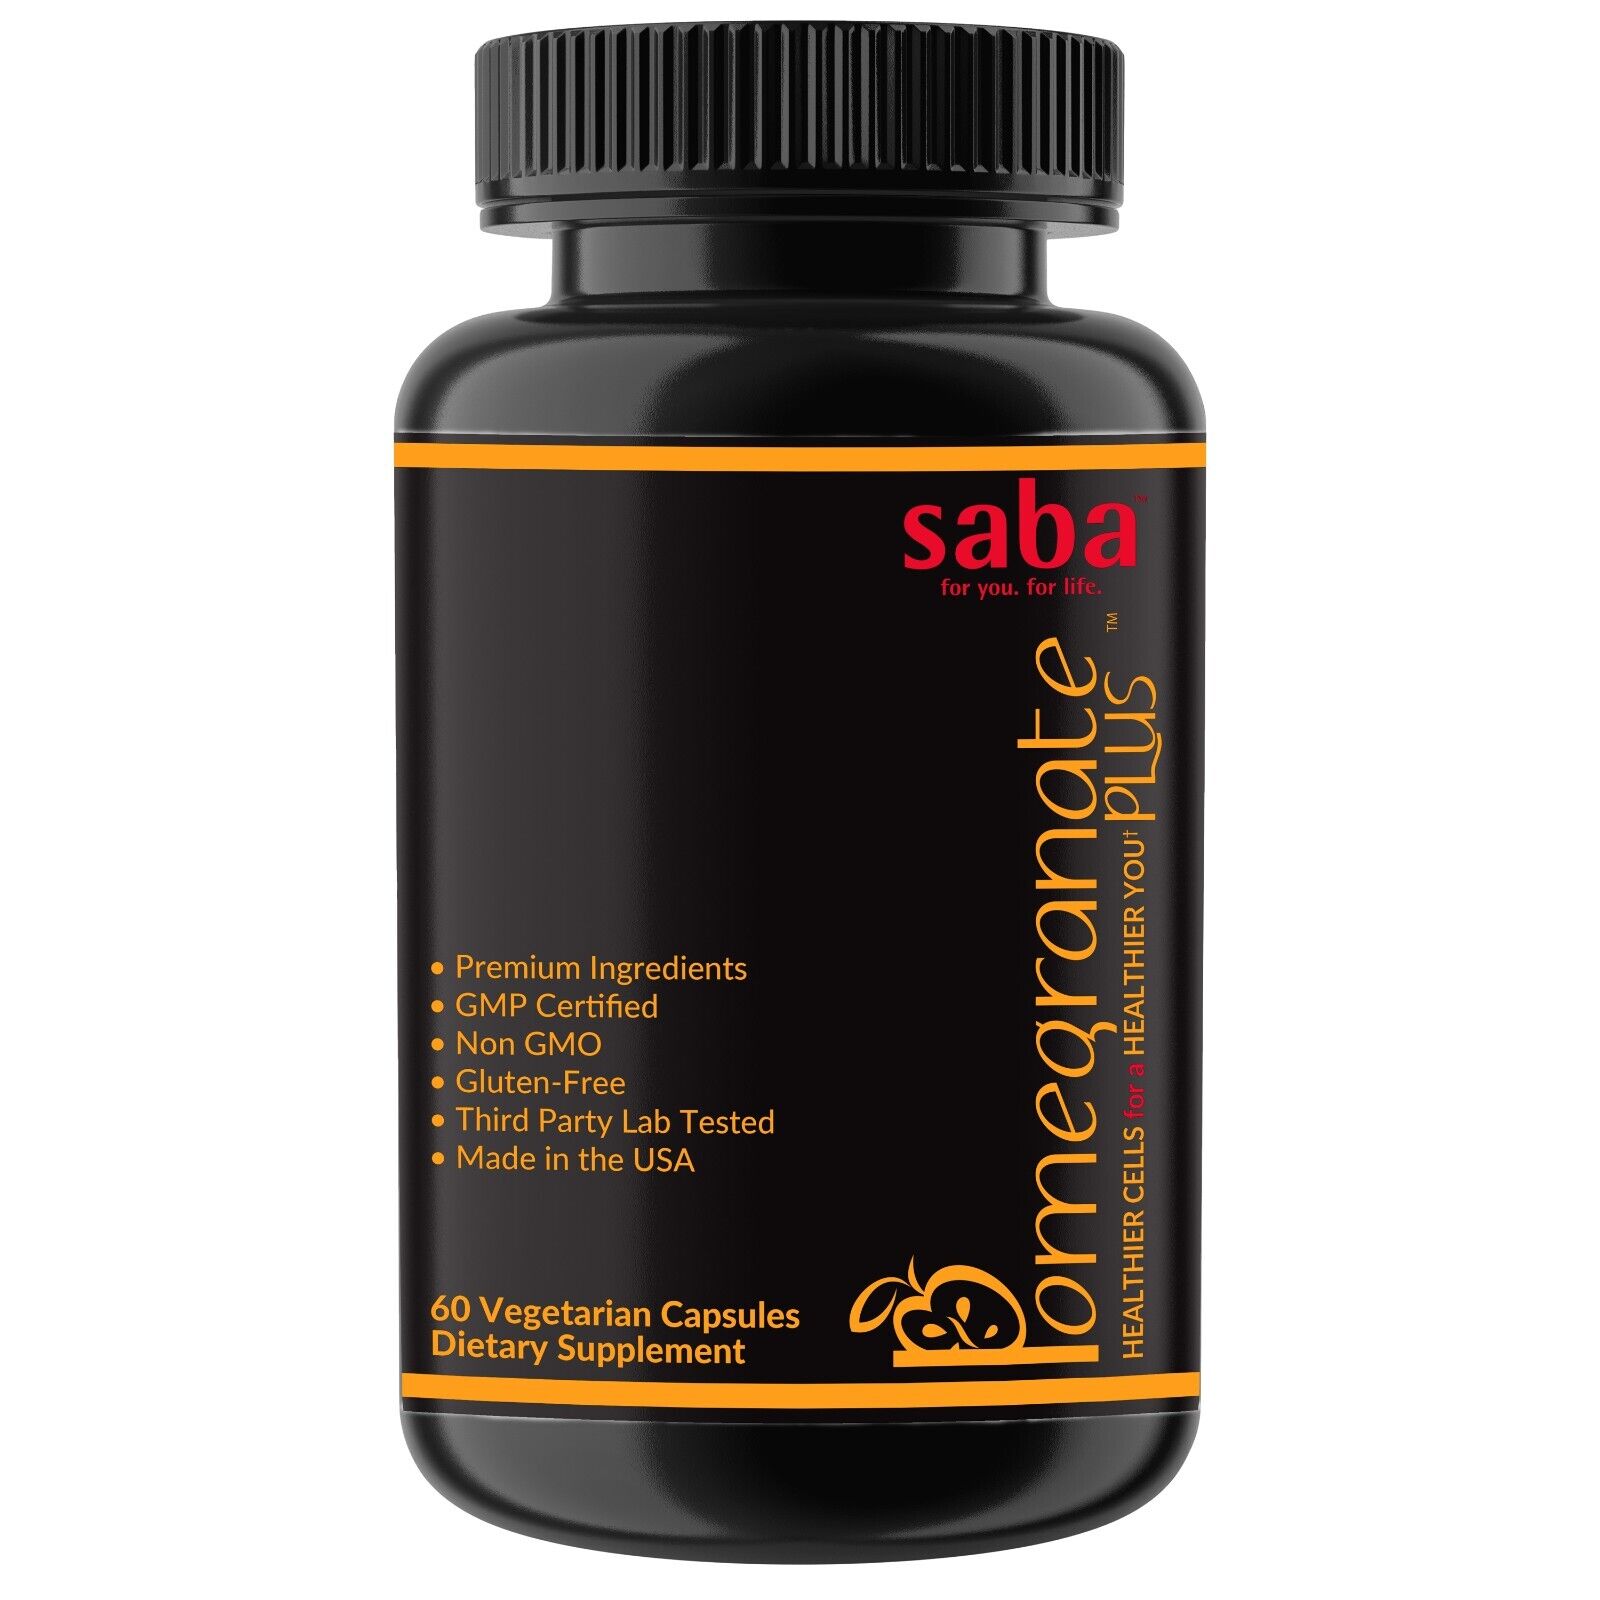 Saba Pomegranate PLUS - Powerful Nutrition, Antioxidants, & Stress Protector